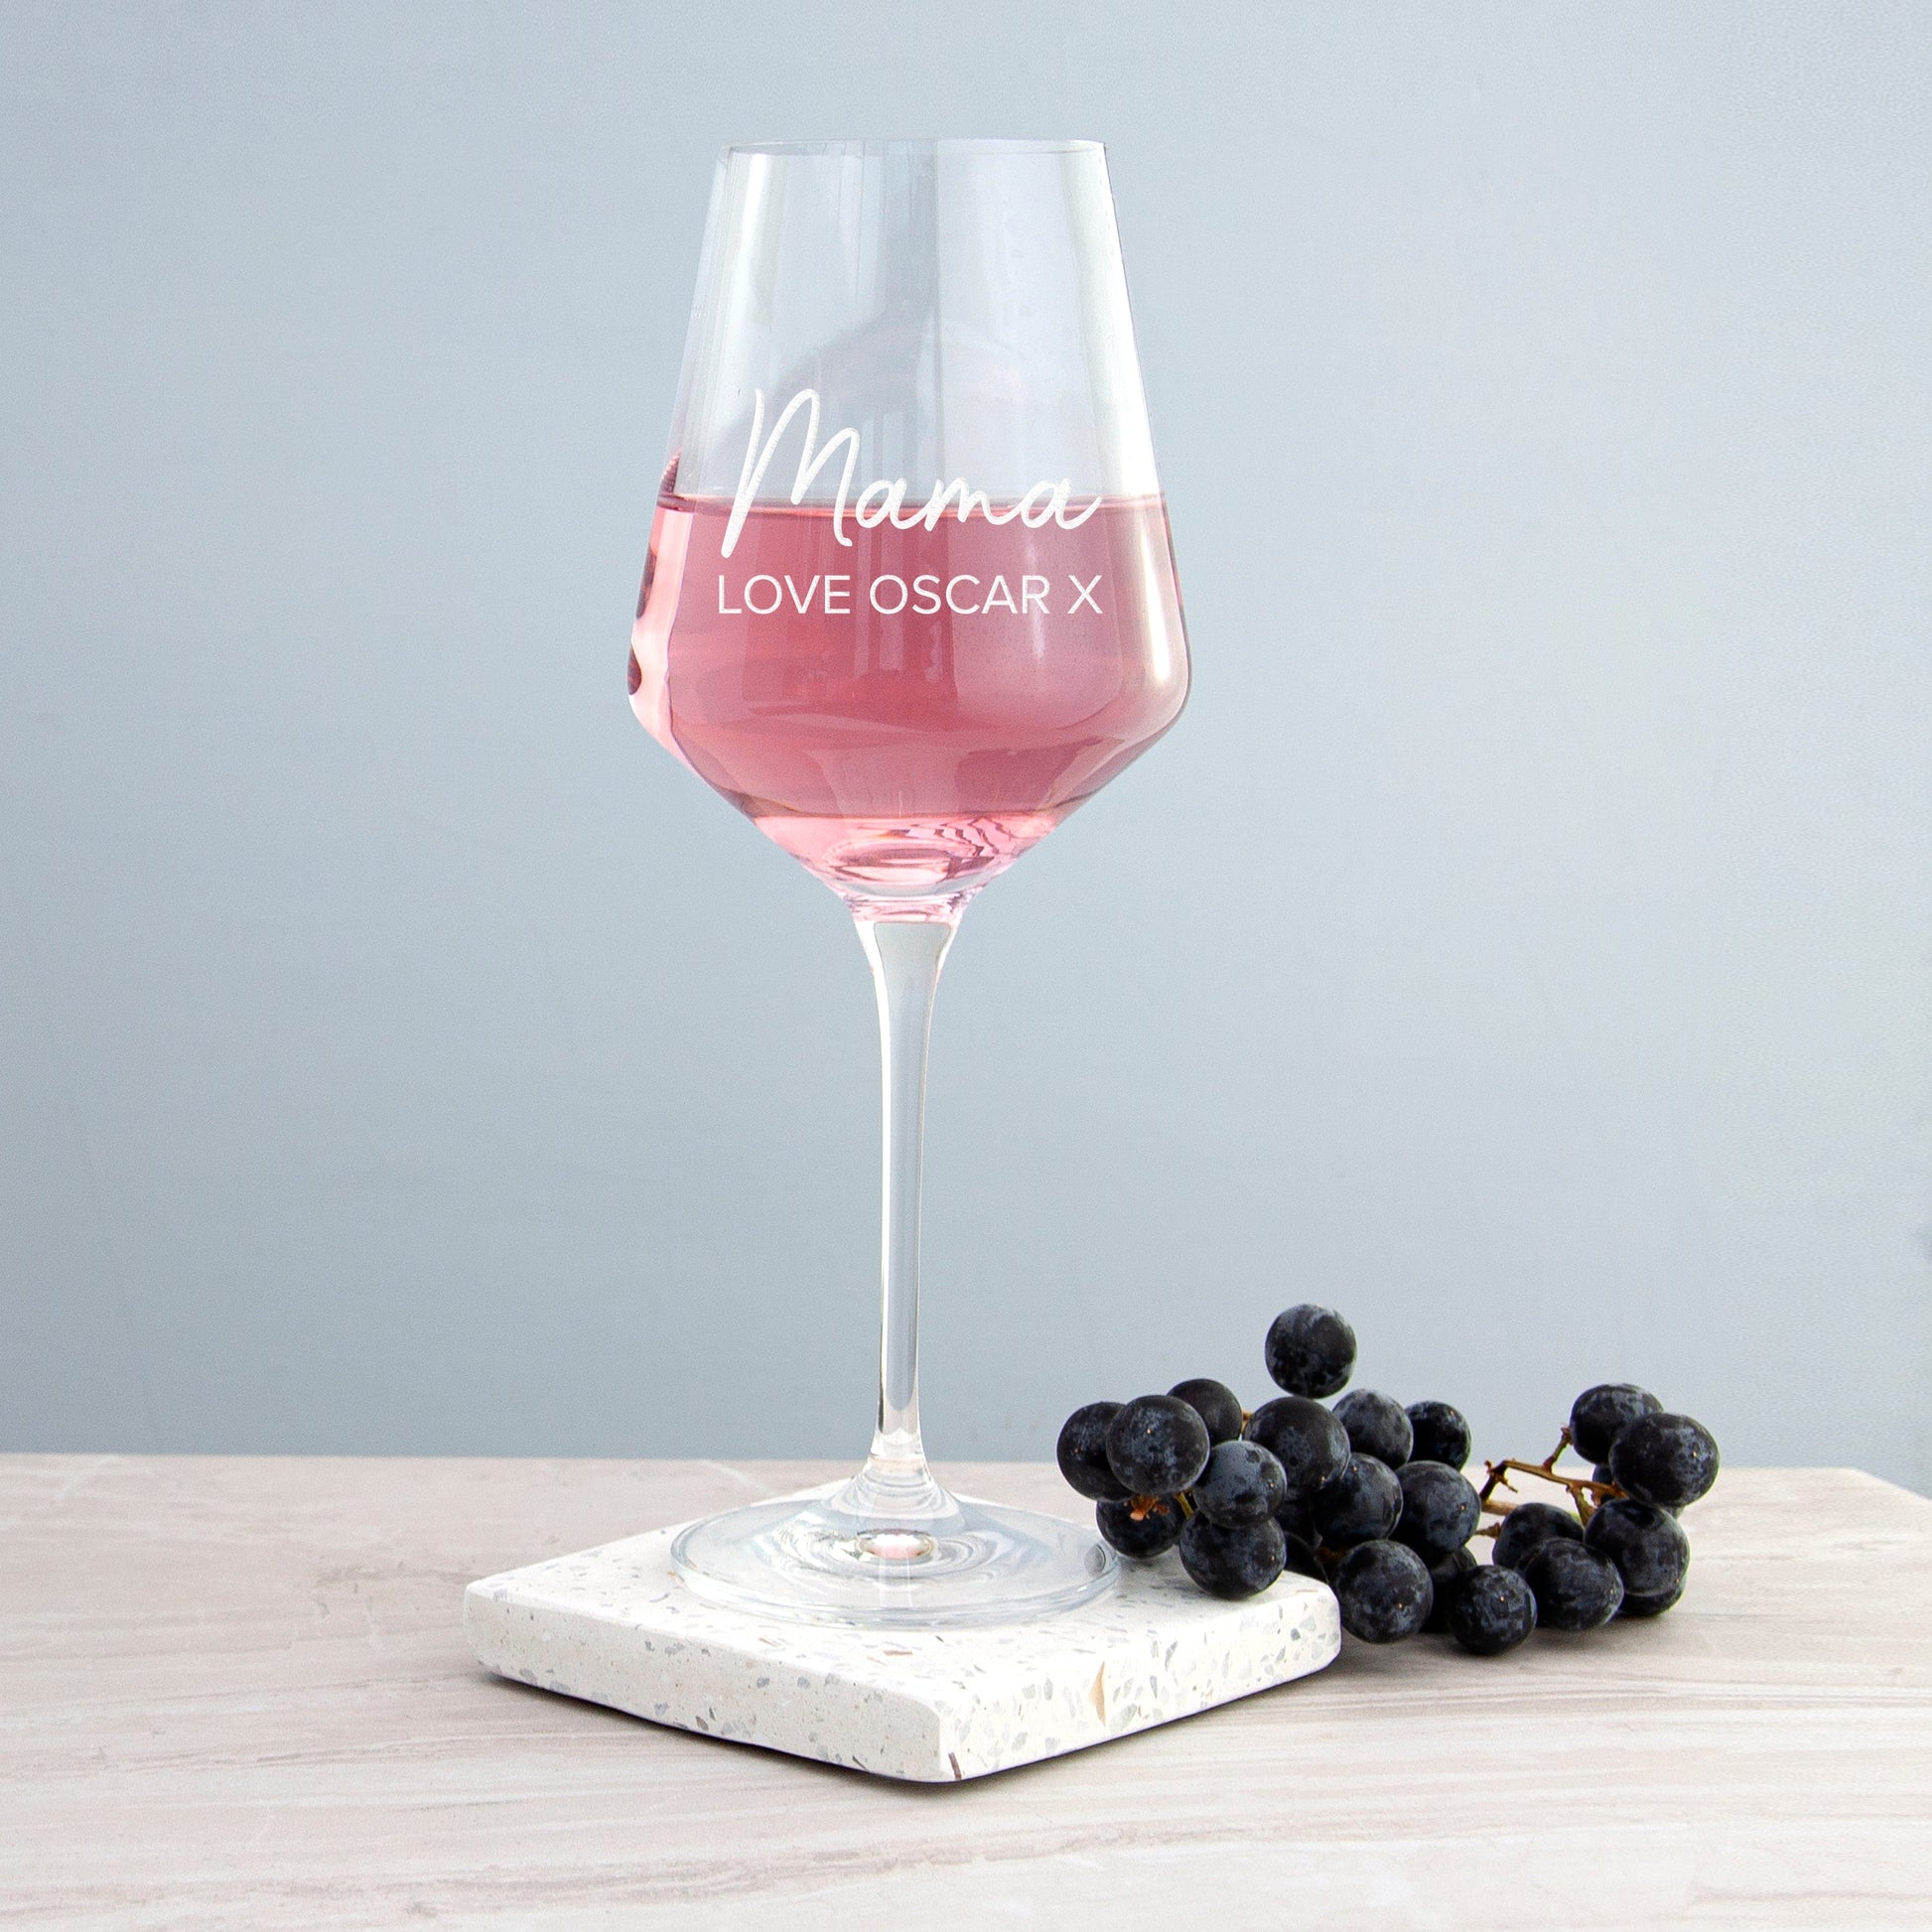 Personalized Wine Glass - Mum's Personalized Wine Glass 